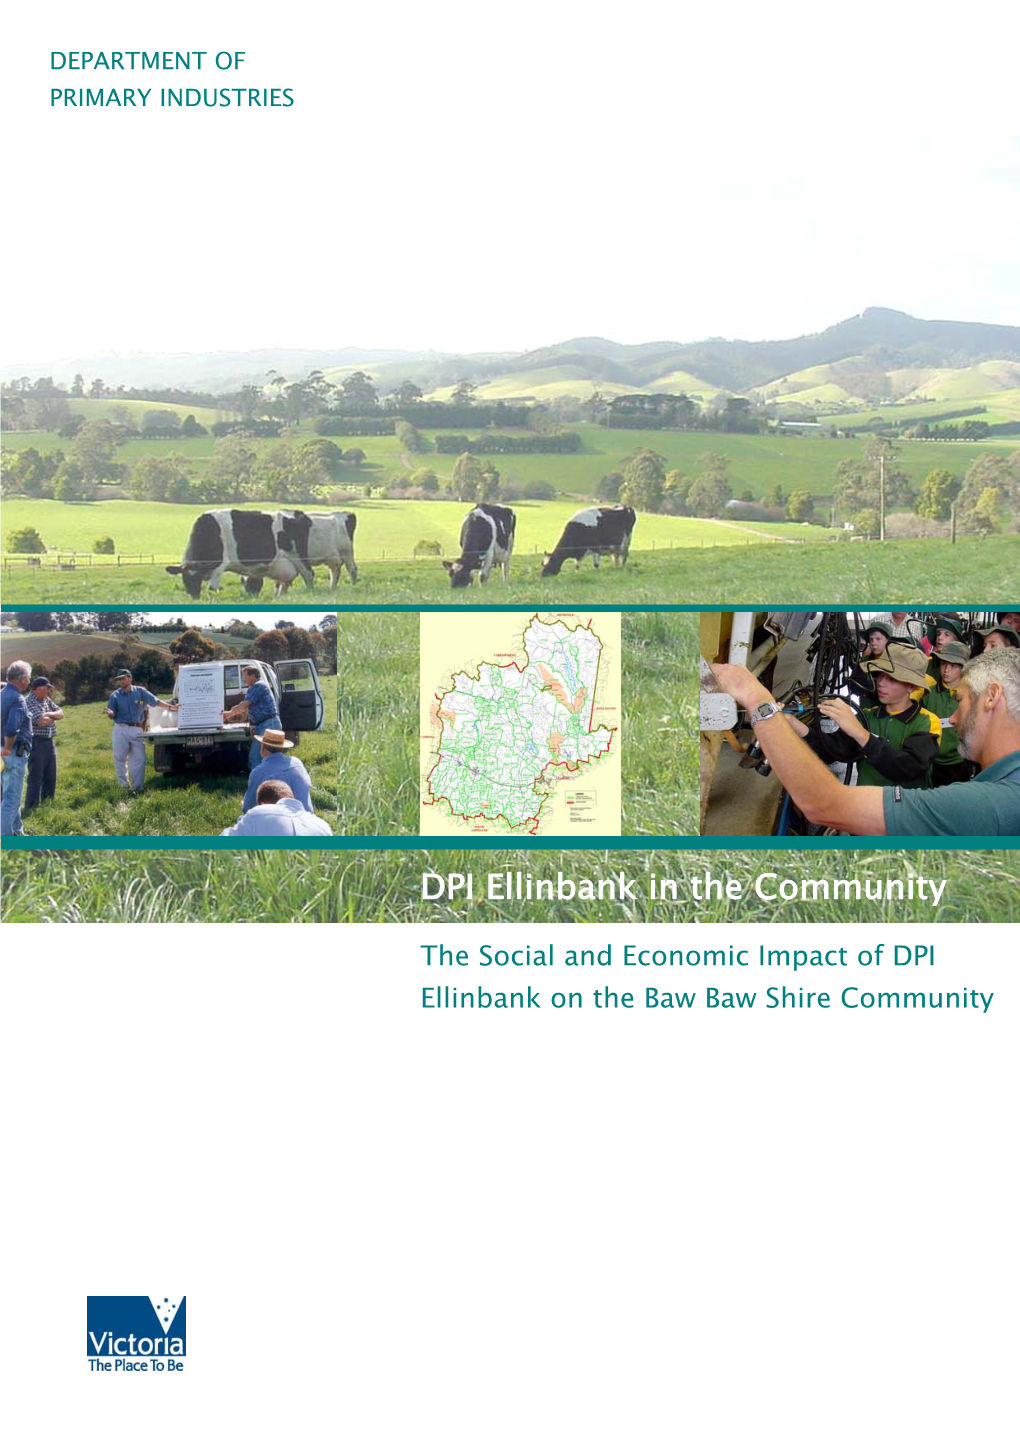 DPI Ellinbank in the Community